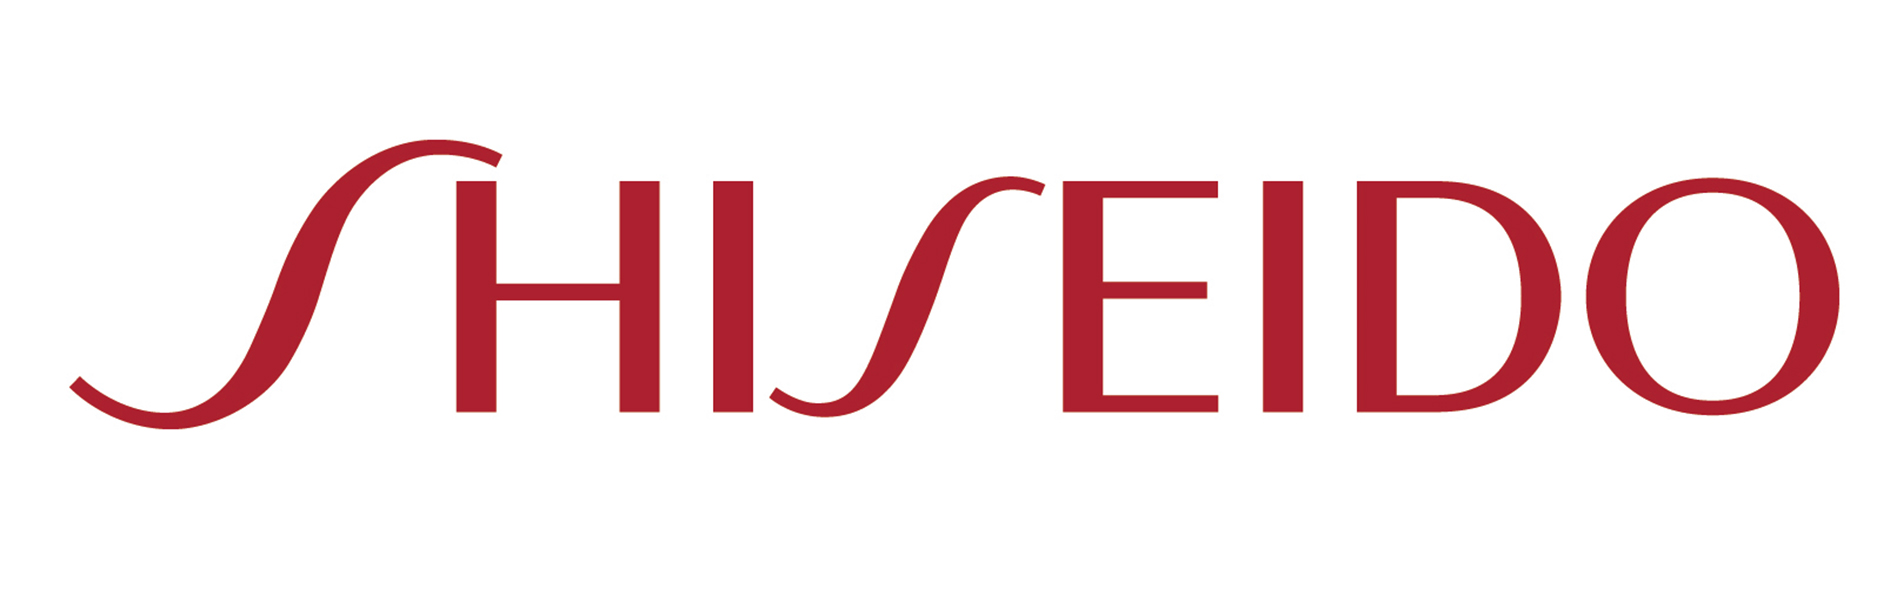 Logo der Firm Shiseido